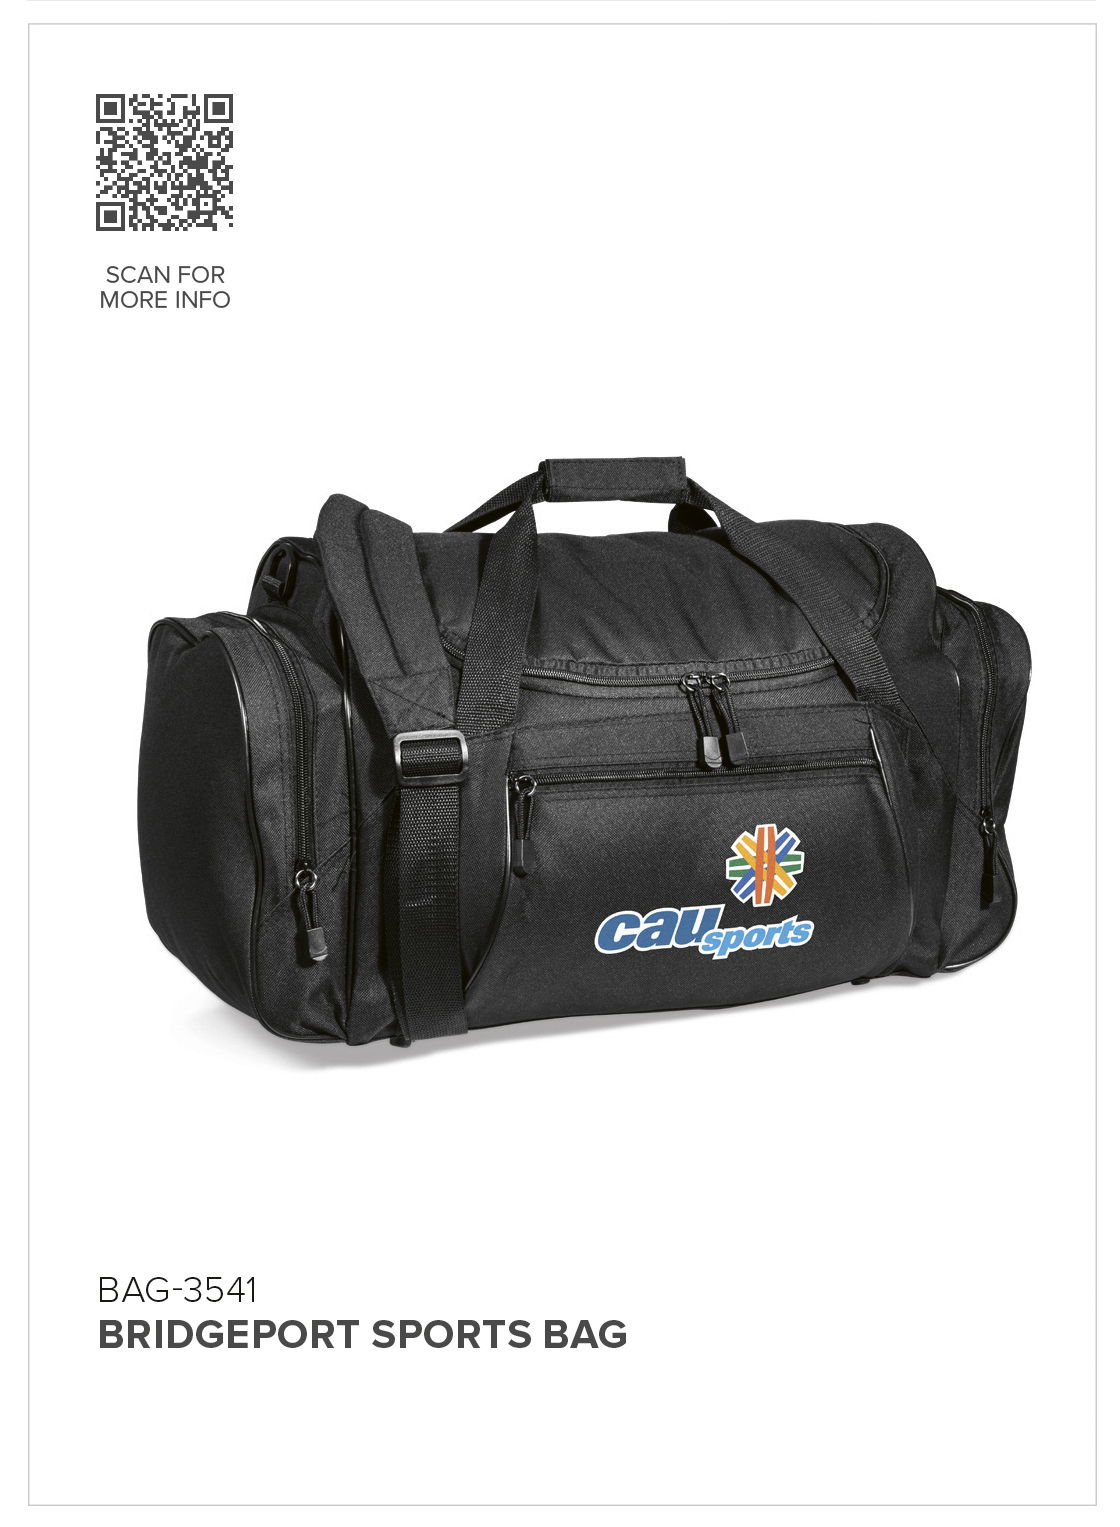 BAG-3541 - Bridgeport Sports Bag - Catalogue Image